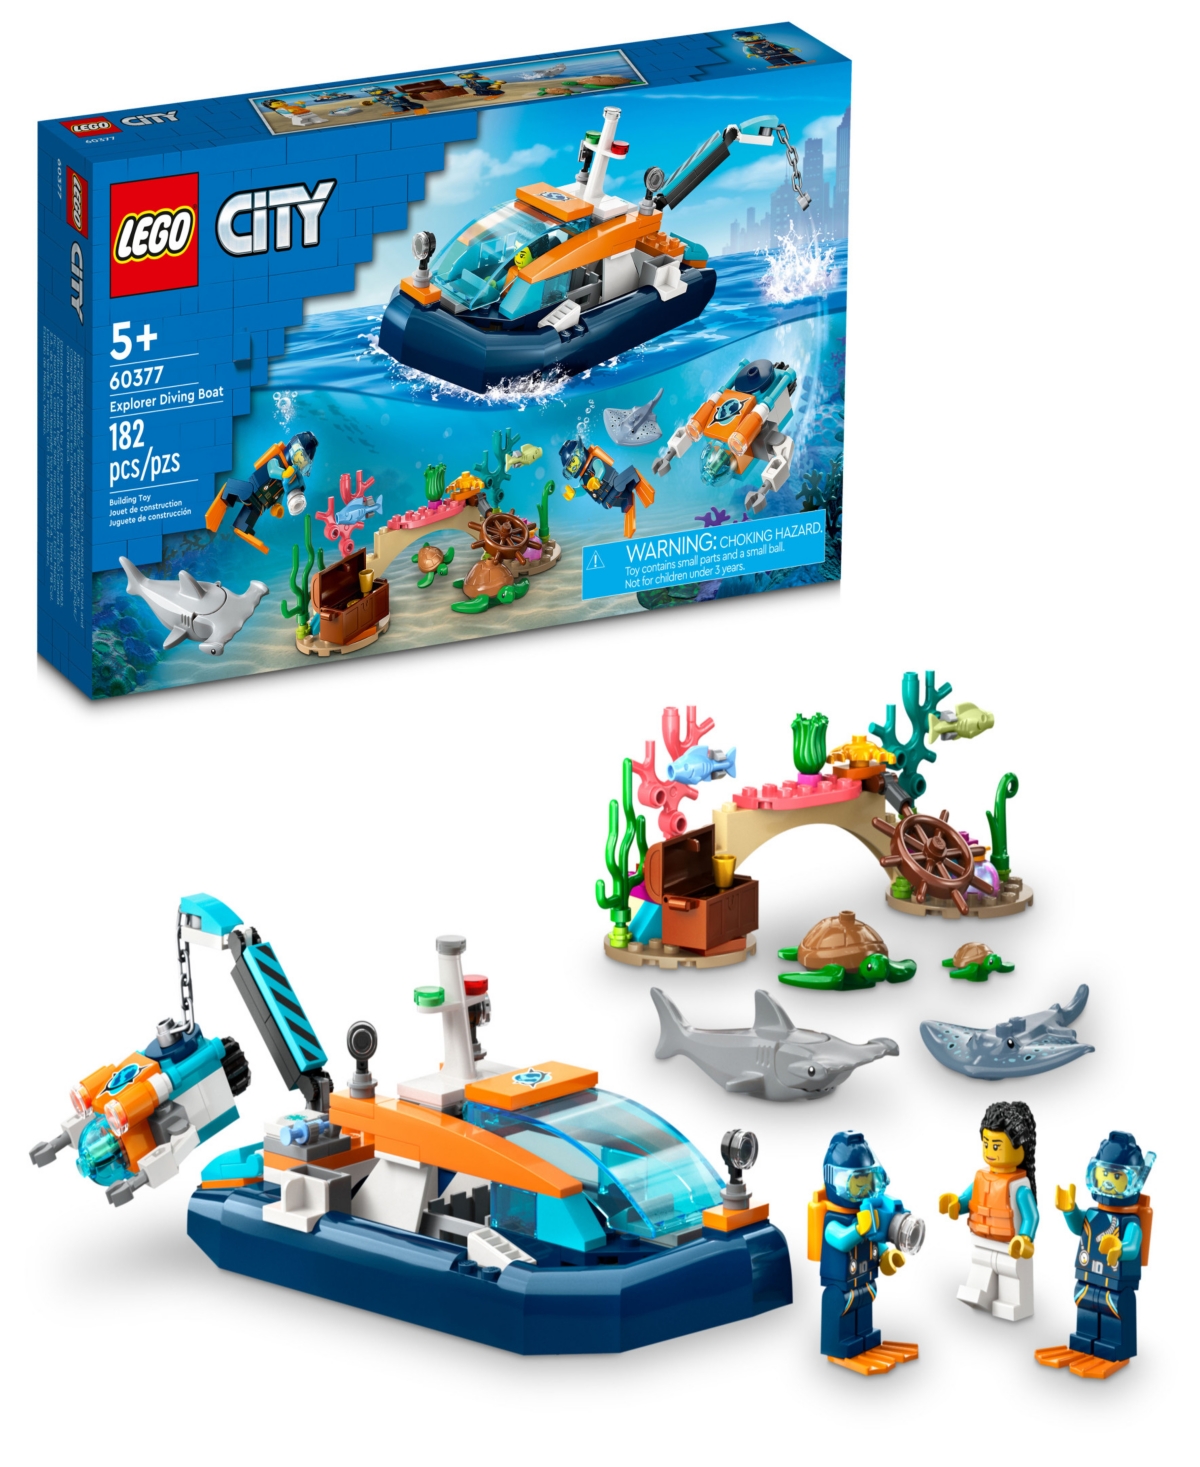 Lego Kids' City Explorer Diving Boat Ocean Building Toy Set Play 60377 In Multicolor